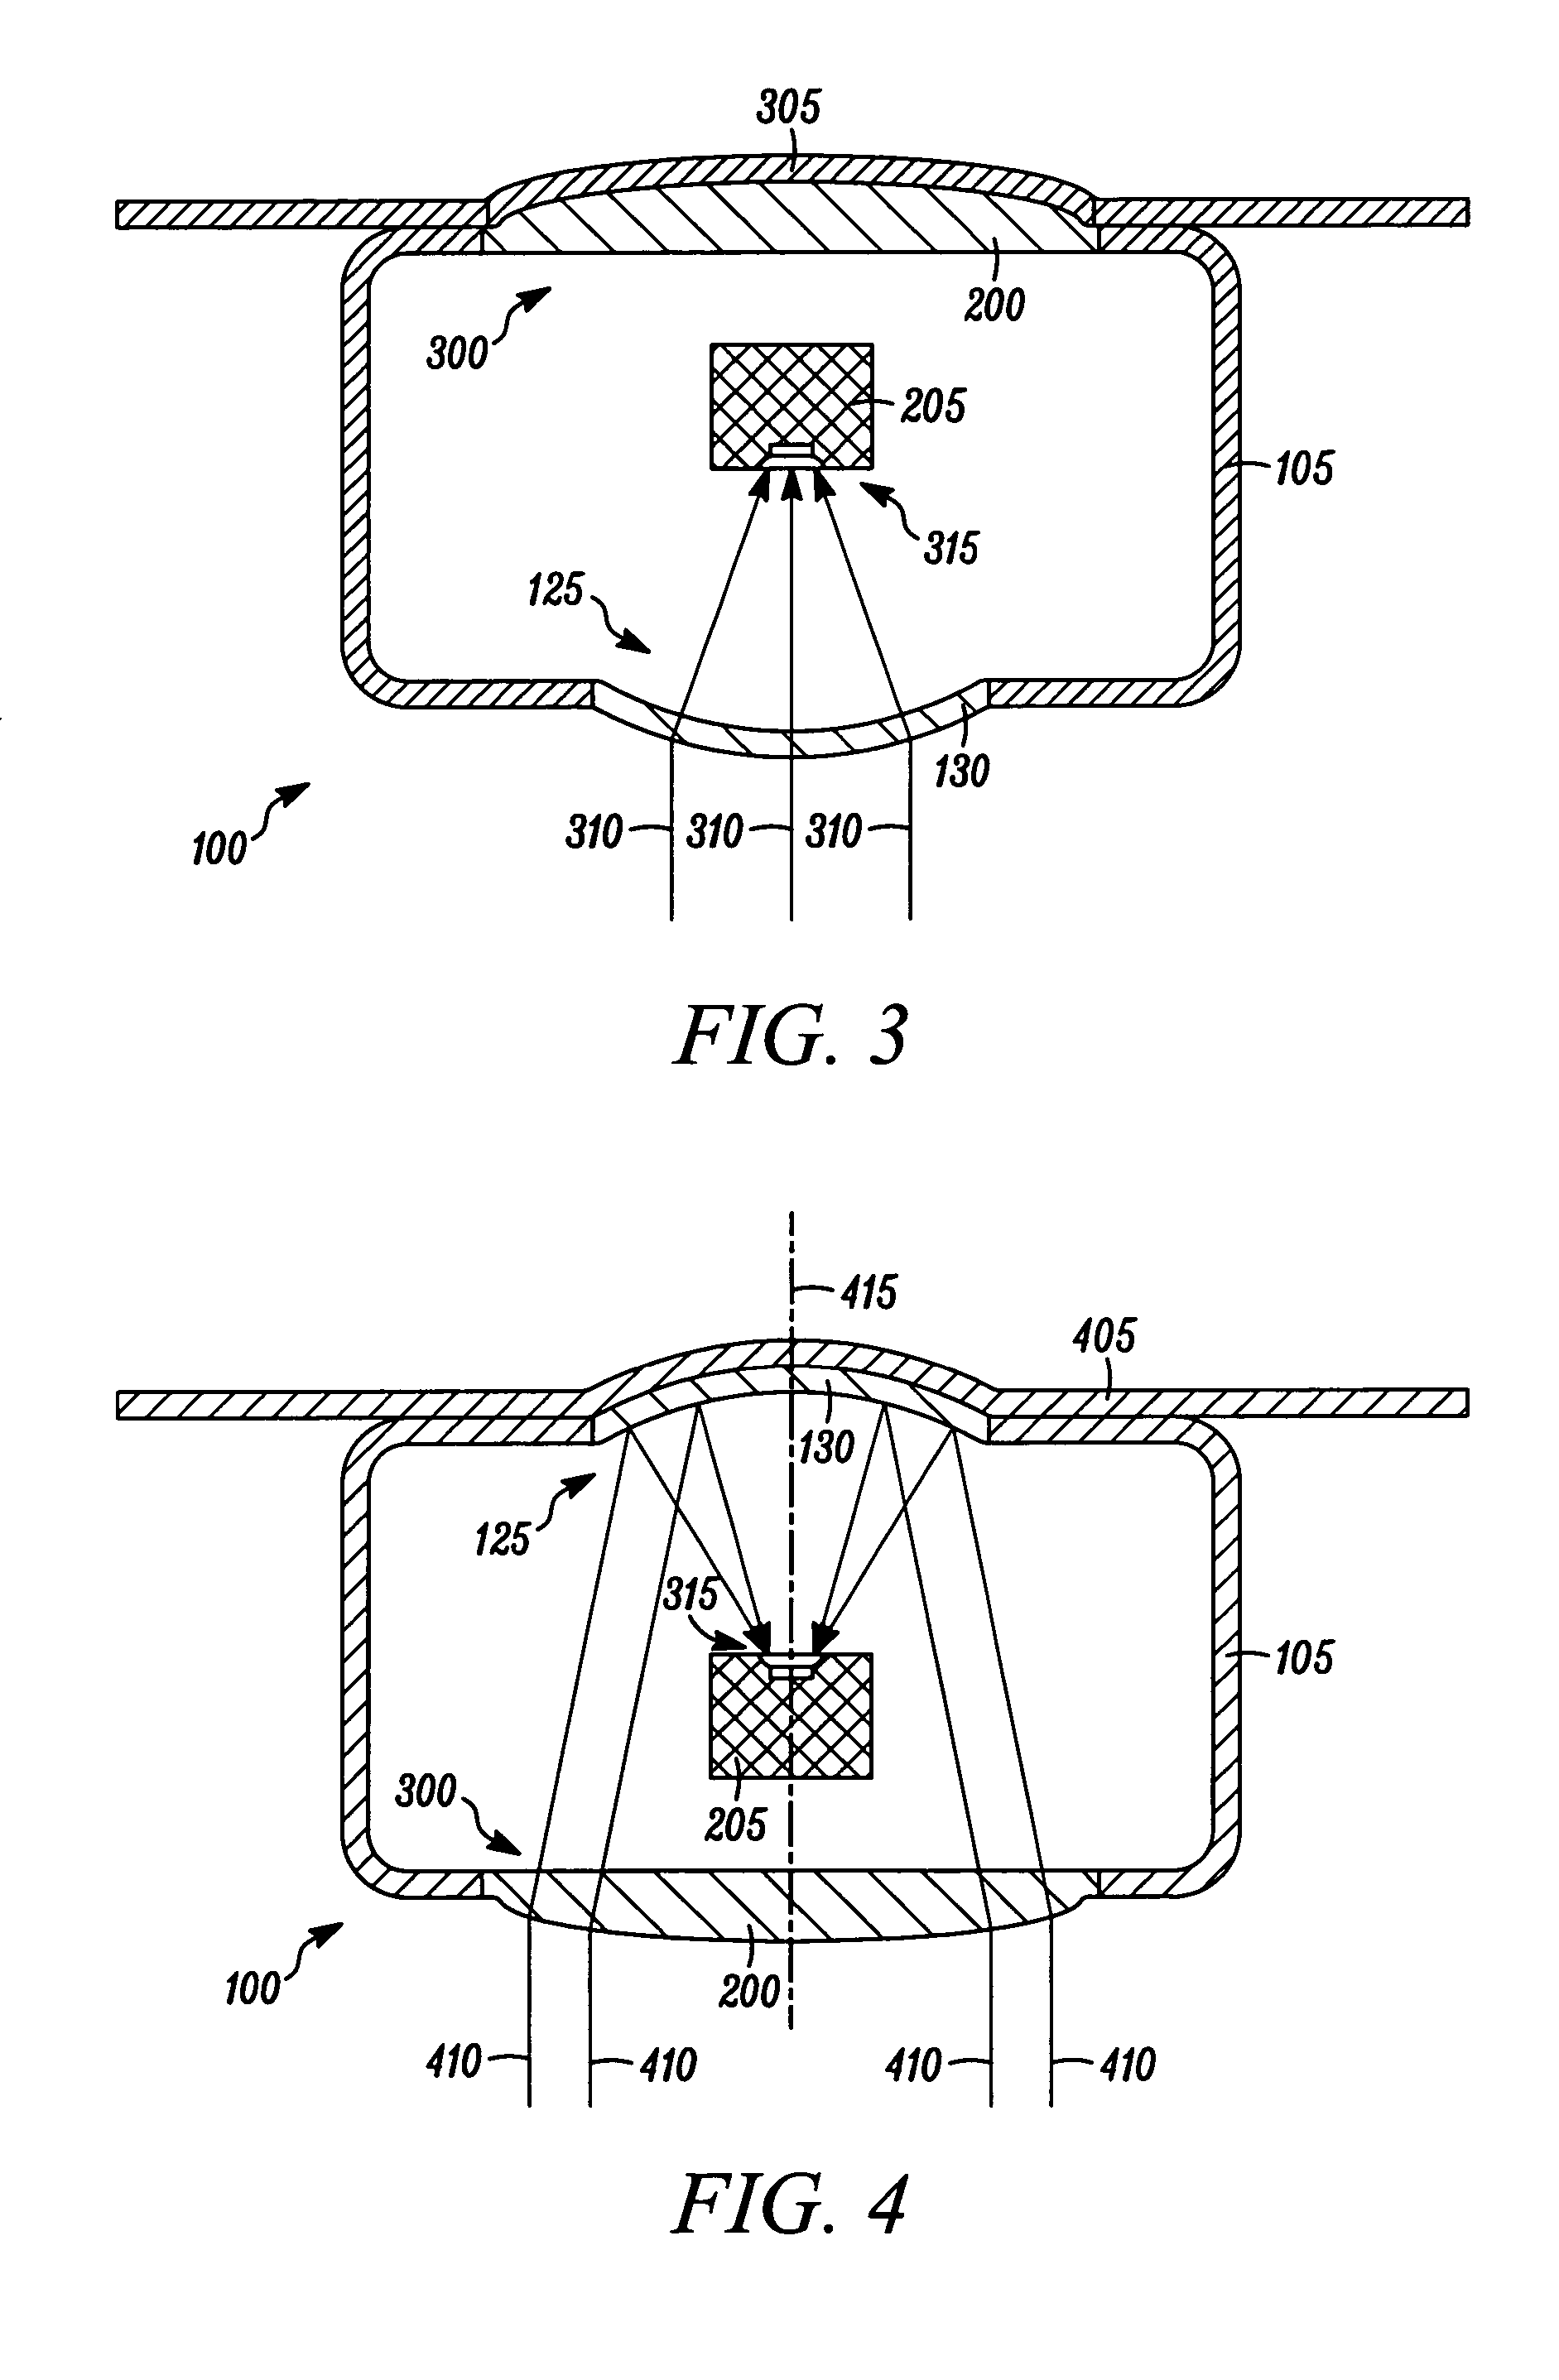 Multi-direction image capture apparatus